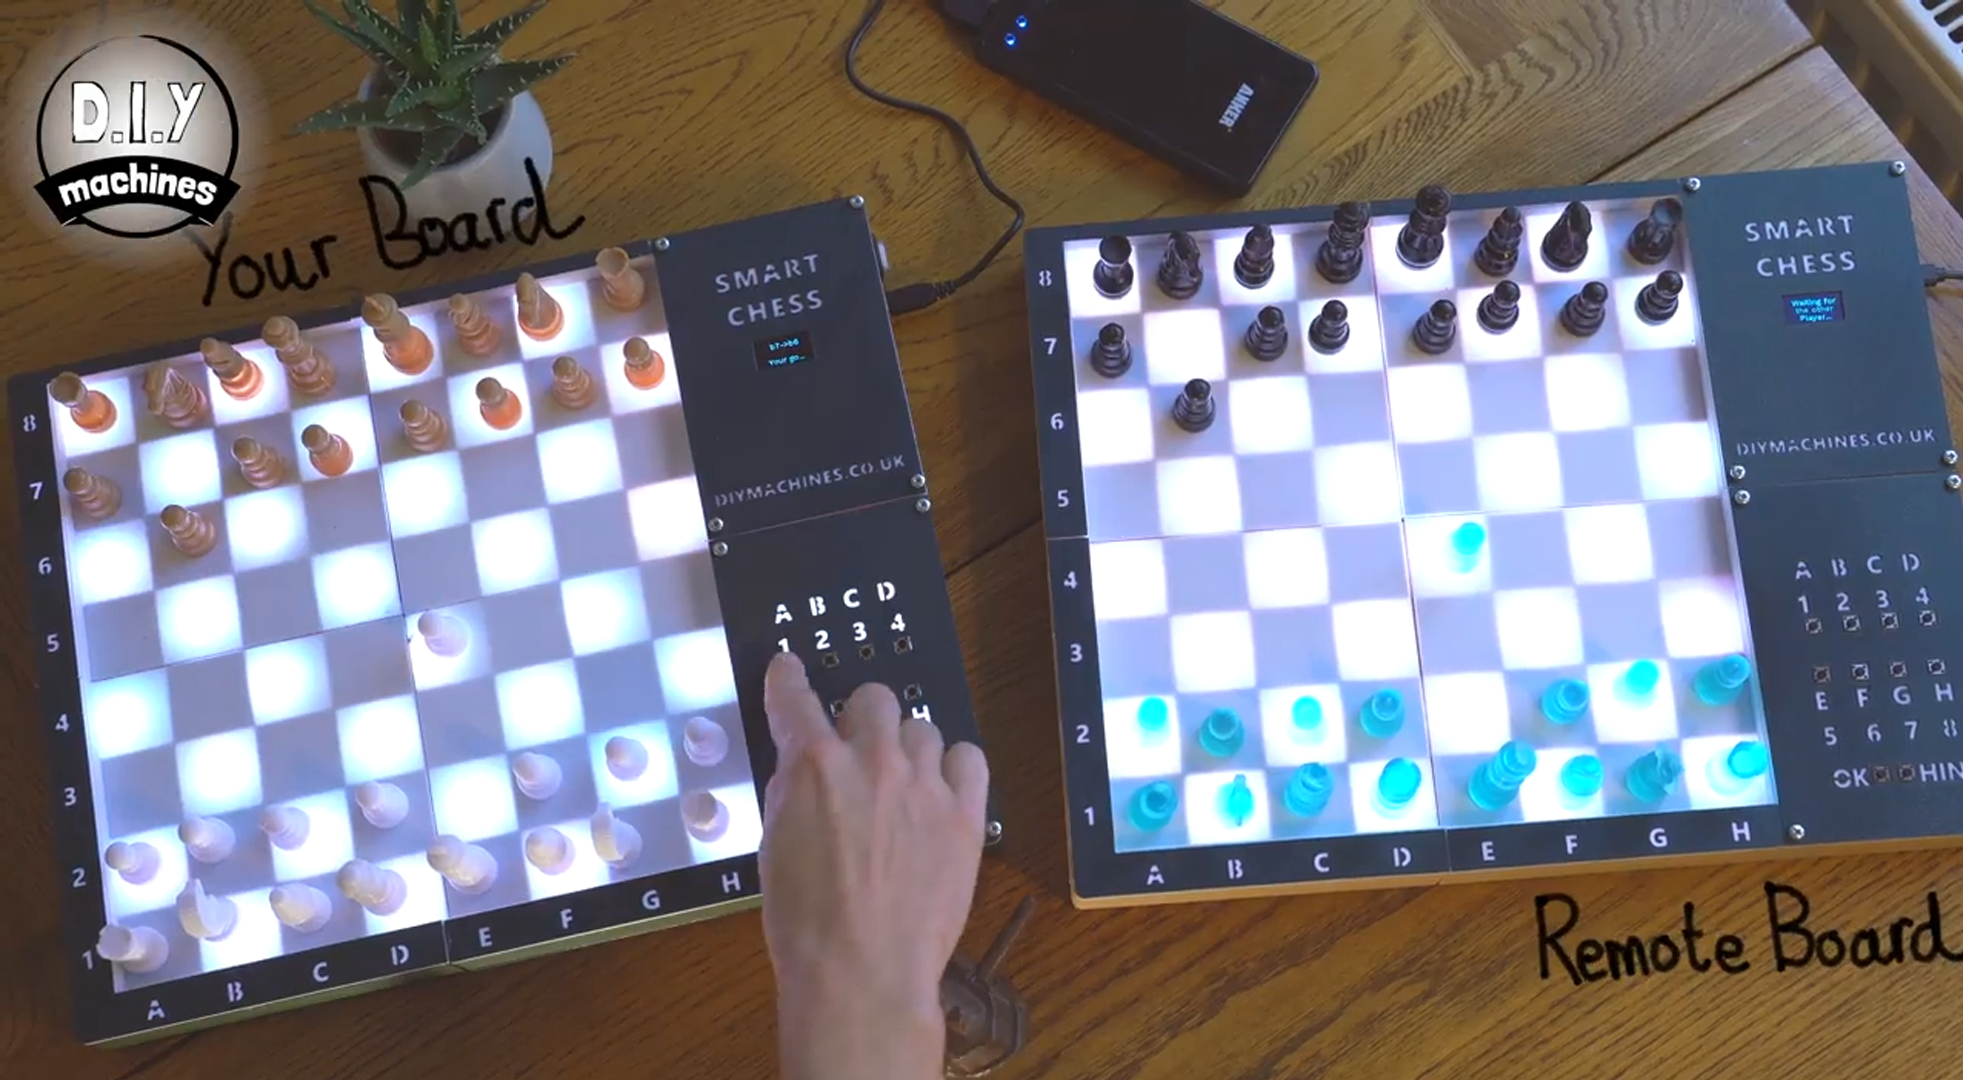 Chess Playing Robot Powered by Raspberry Pi - Raspberry Turk 